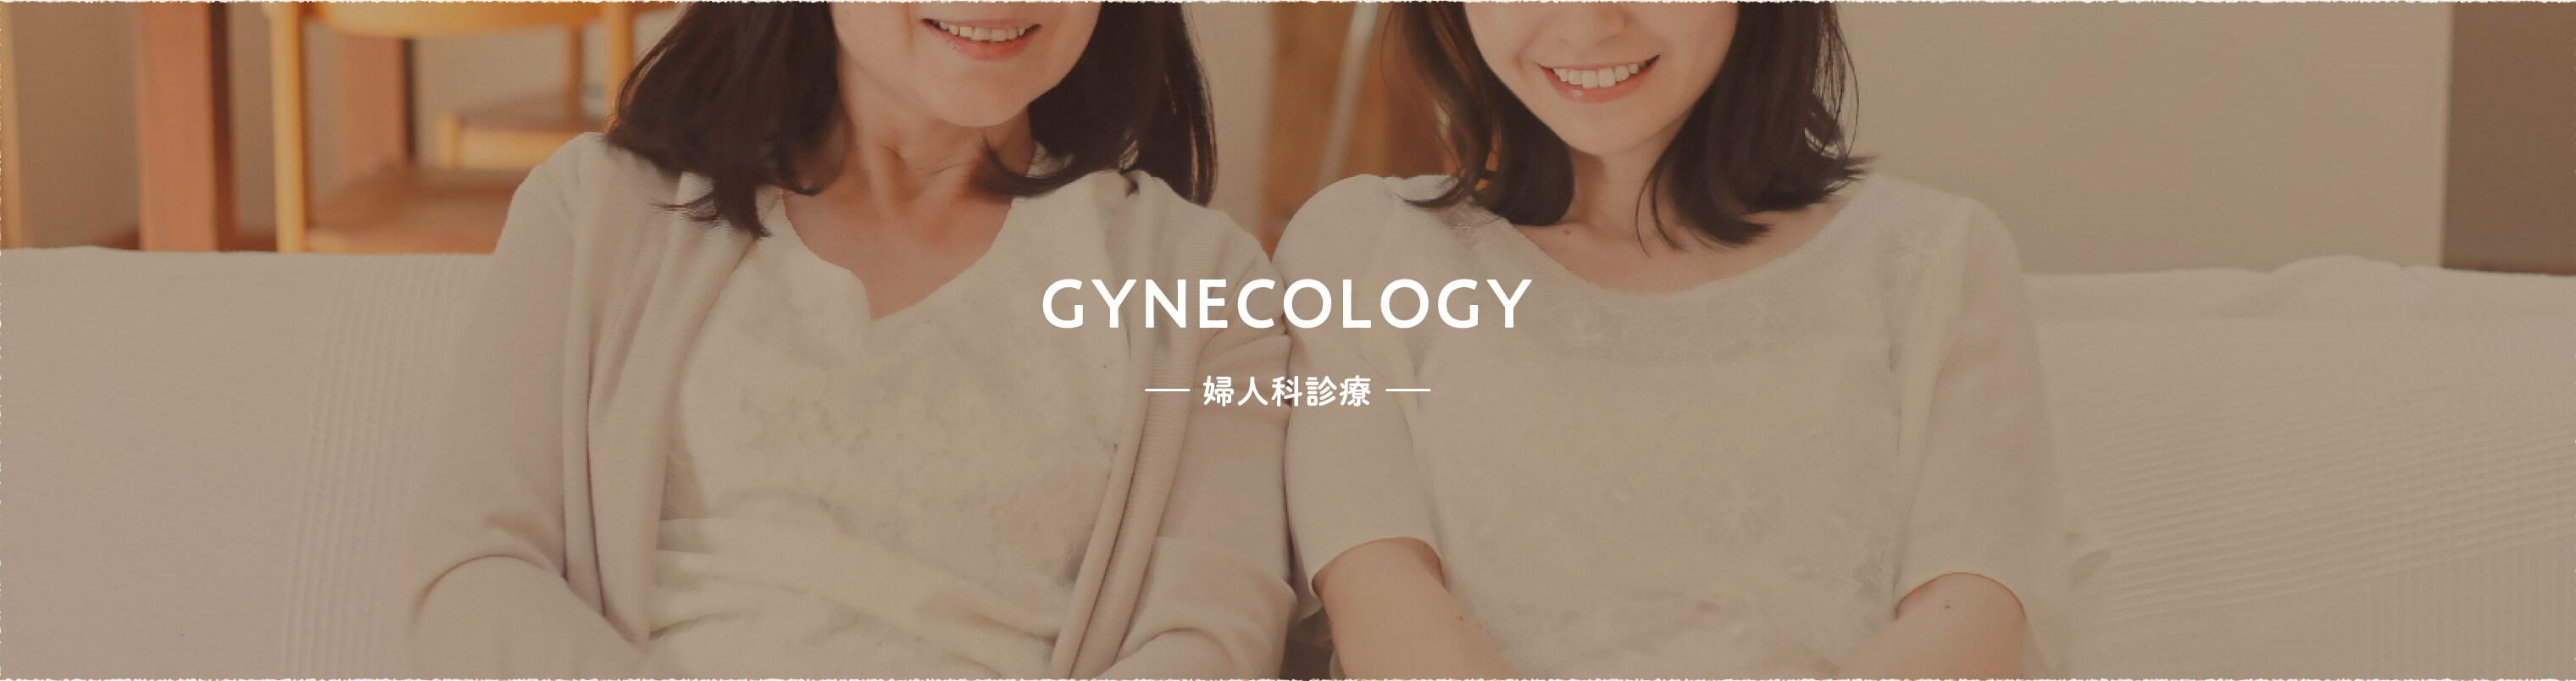 GYNECOLOGY —婦人科診療—